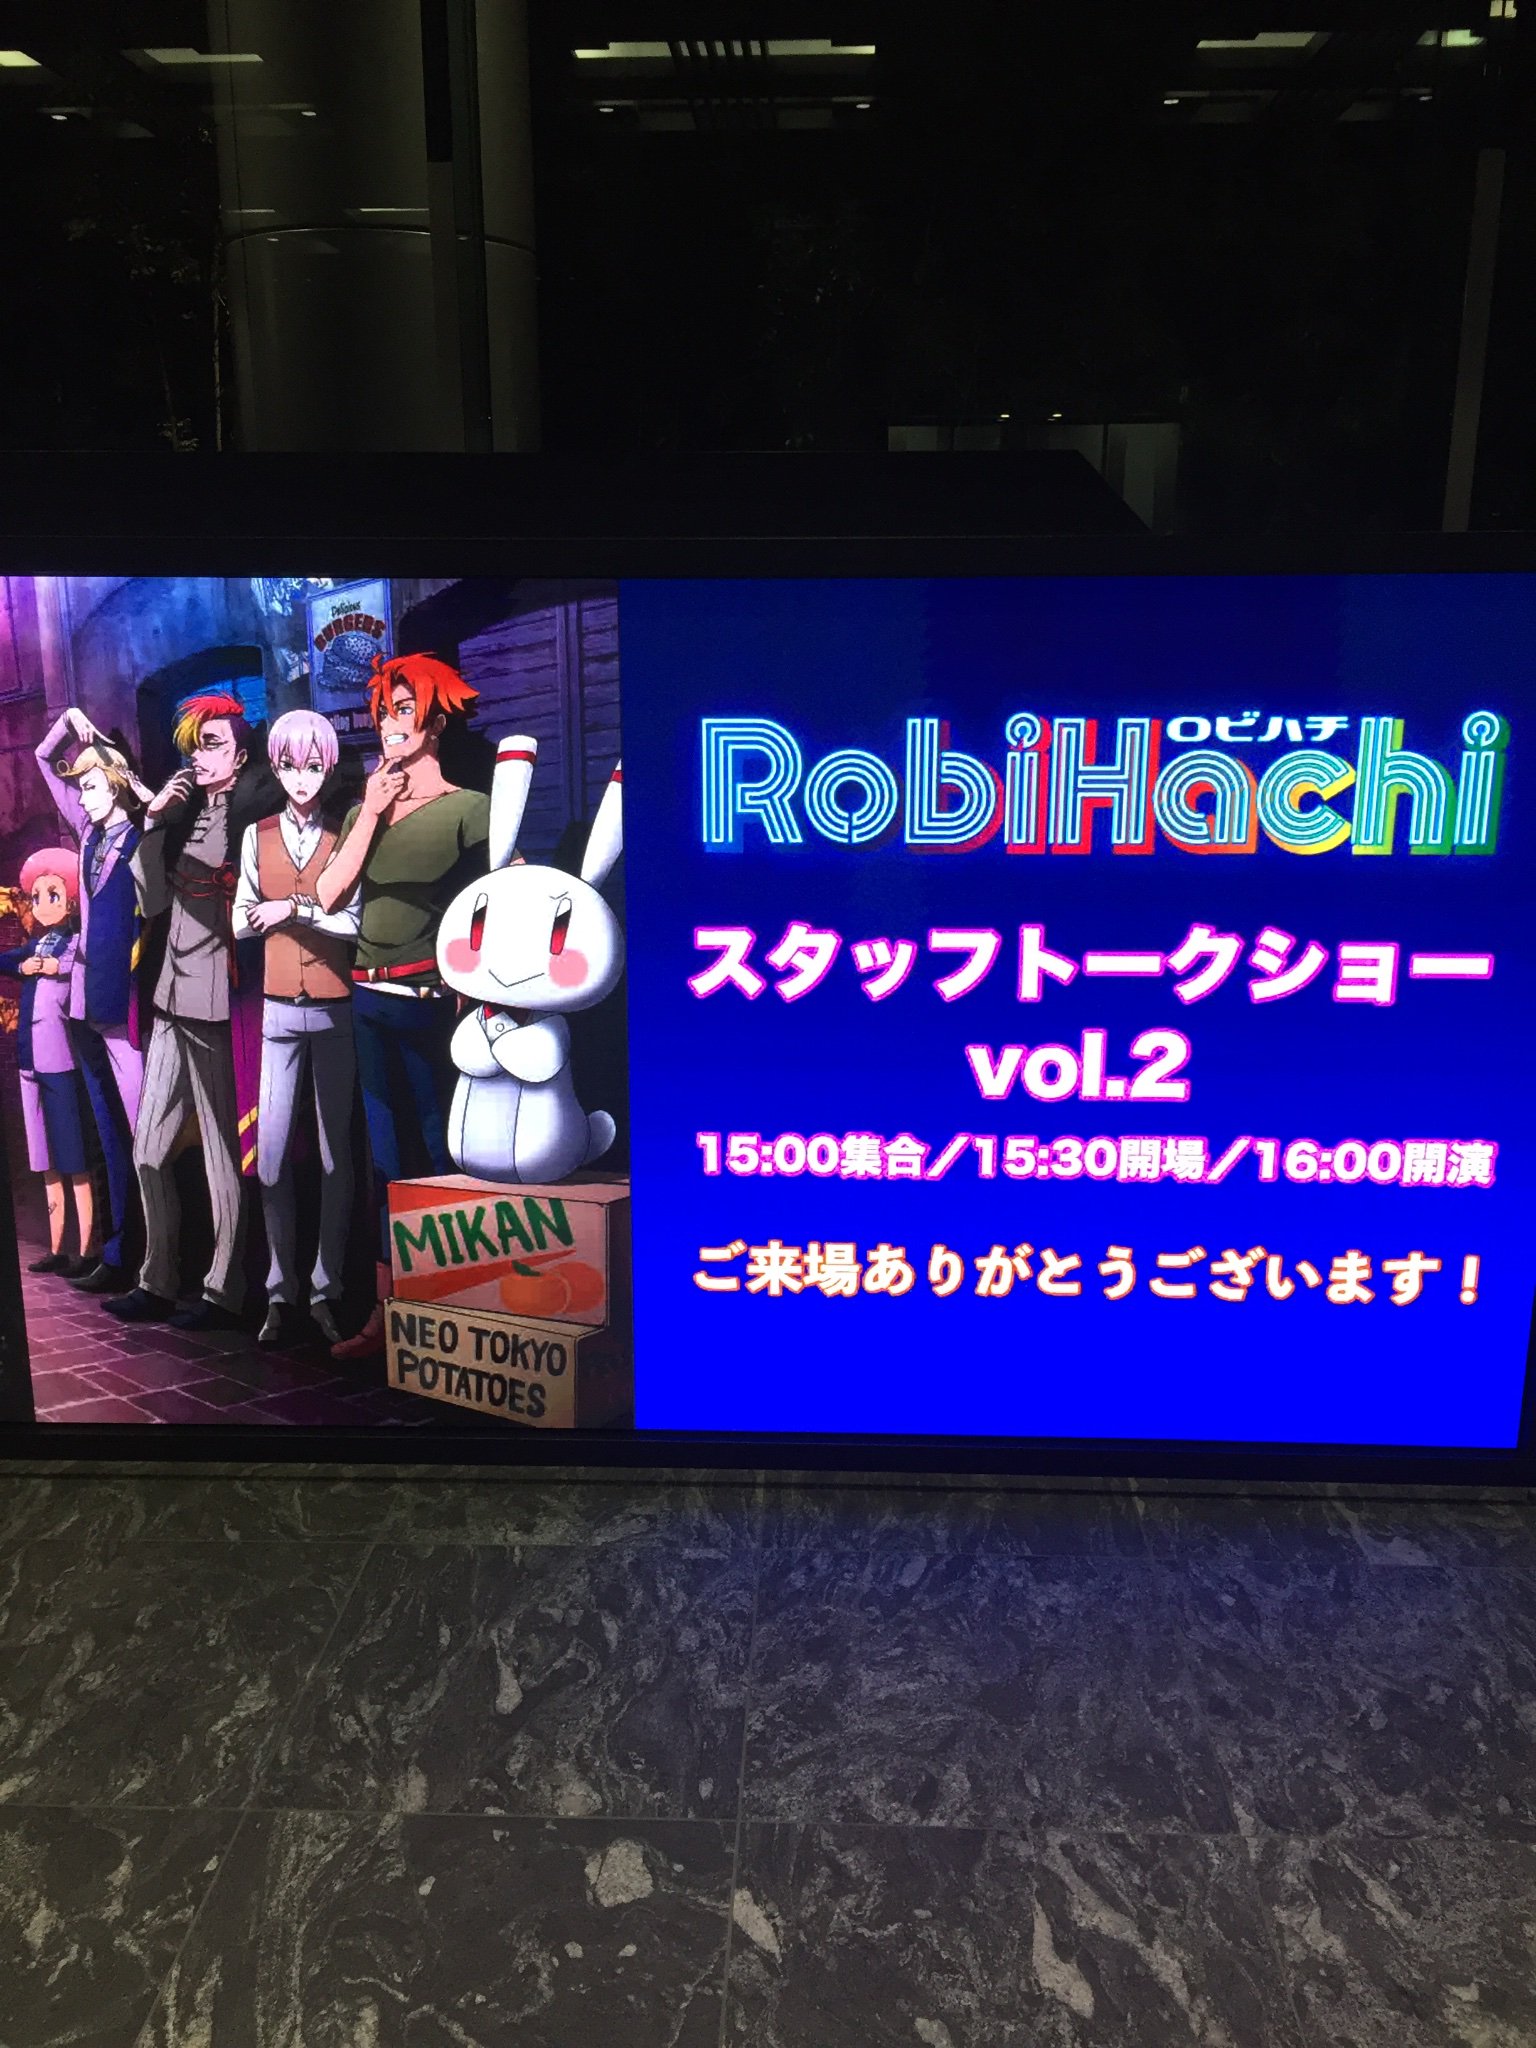 TVアニメ「RobiHachi」(ロビハチ)公式 (@RobiHachi_anime) / Twitter